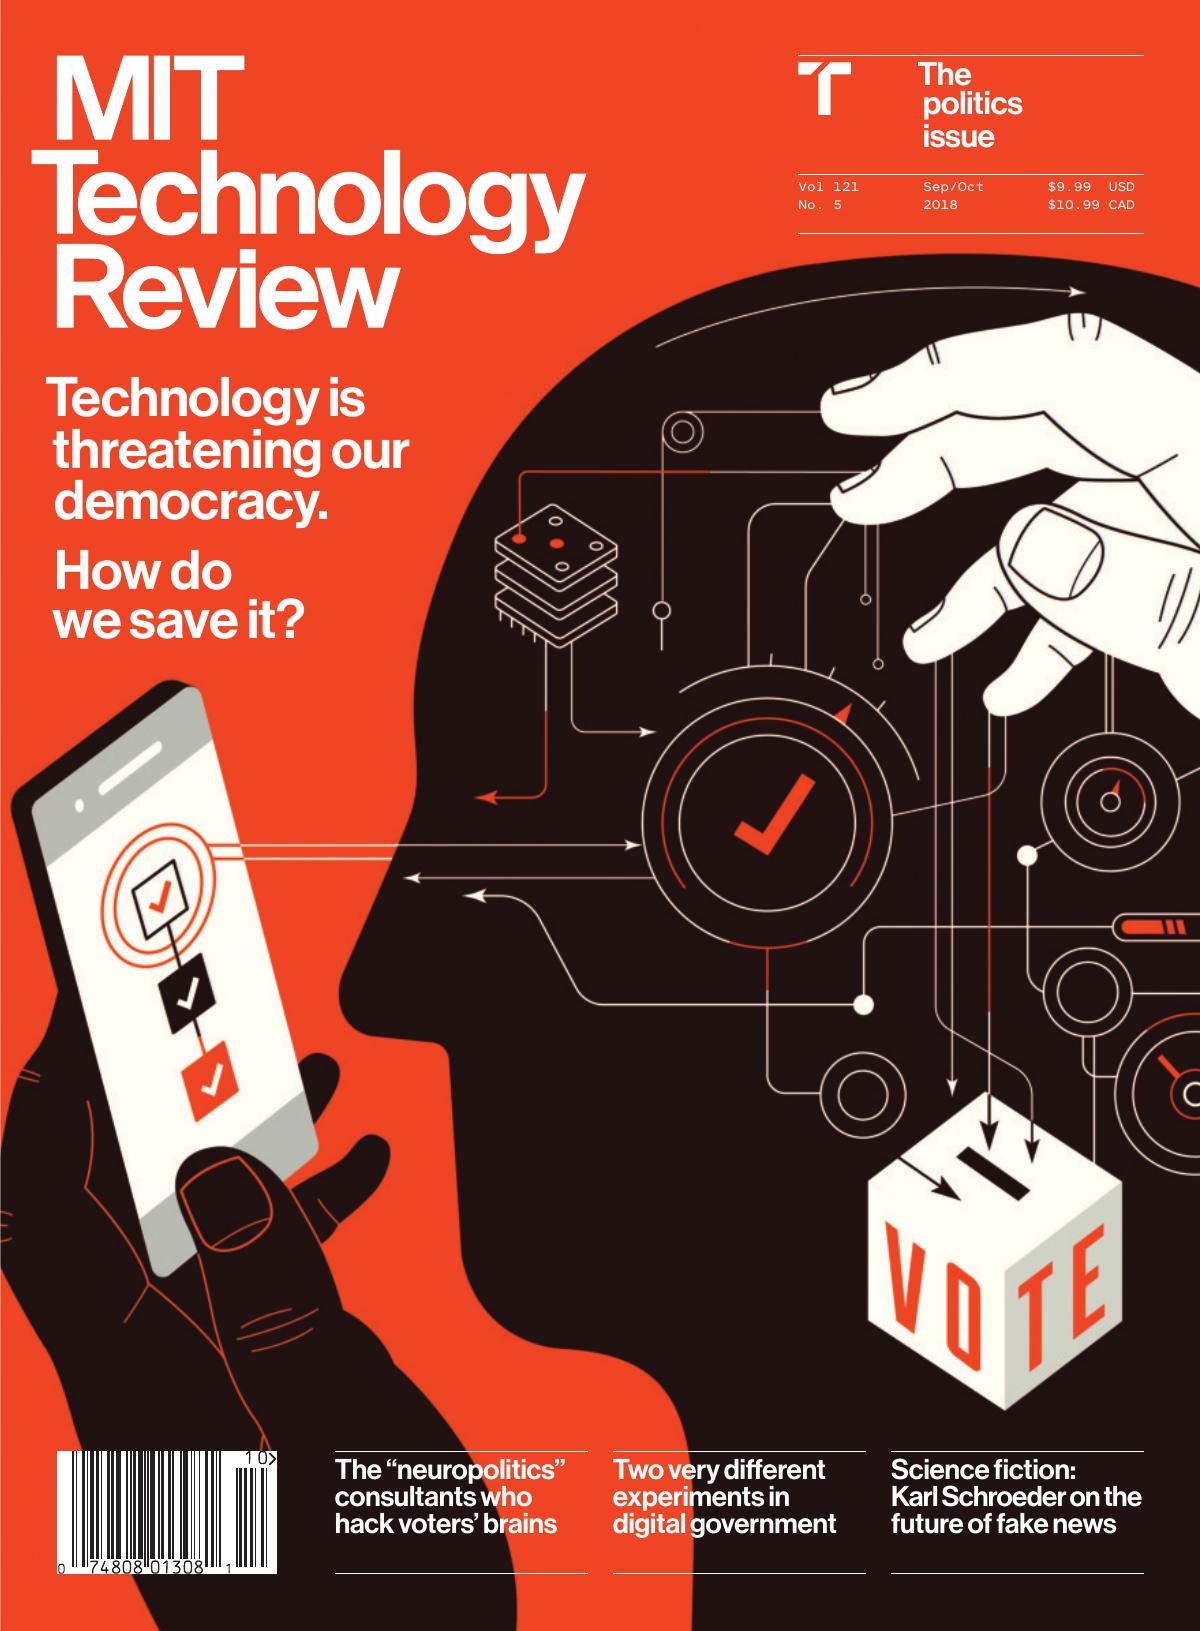 Журнал о гаджетах. Постер технологии. Плакат it технологий. Mit Technology Review. Дизайн плакат технологии.